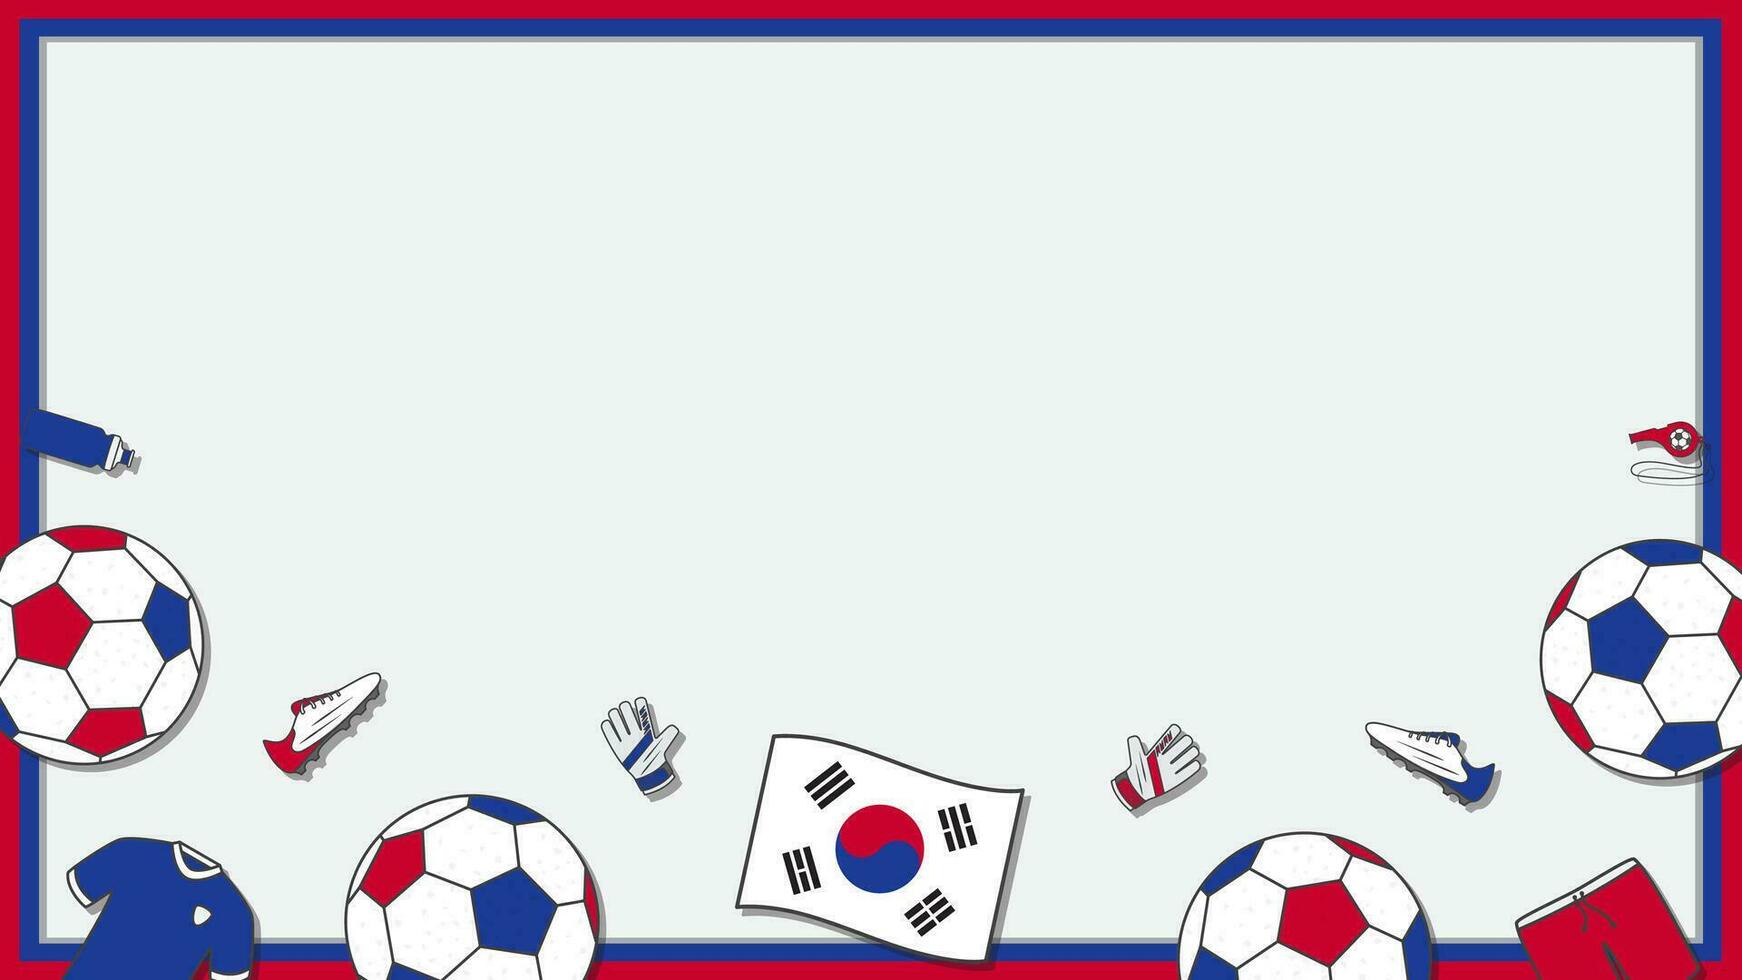 Football Background Design Template. Football Cartoon Vector Illustration. Soccer In South Korea